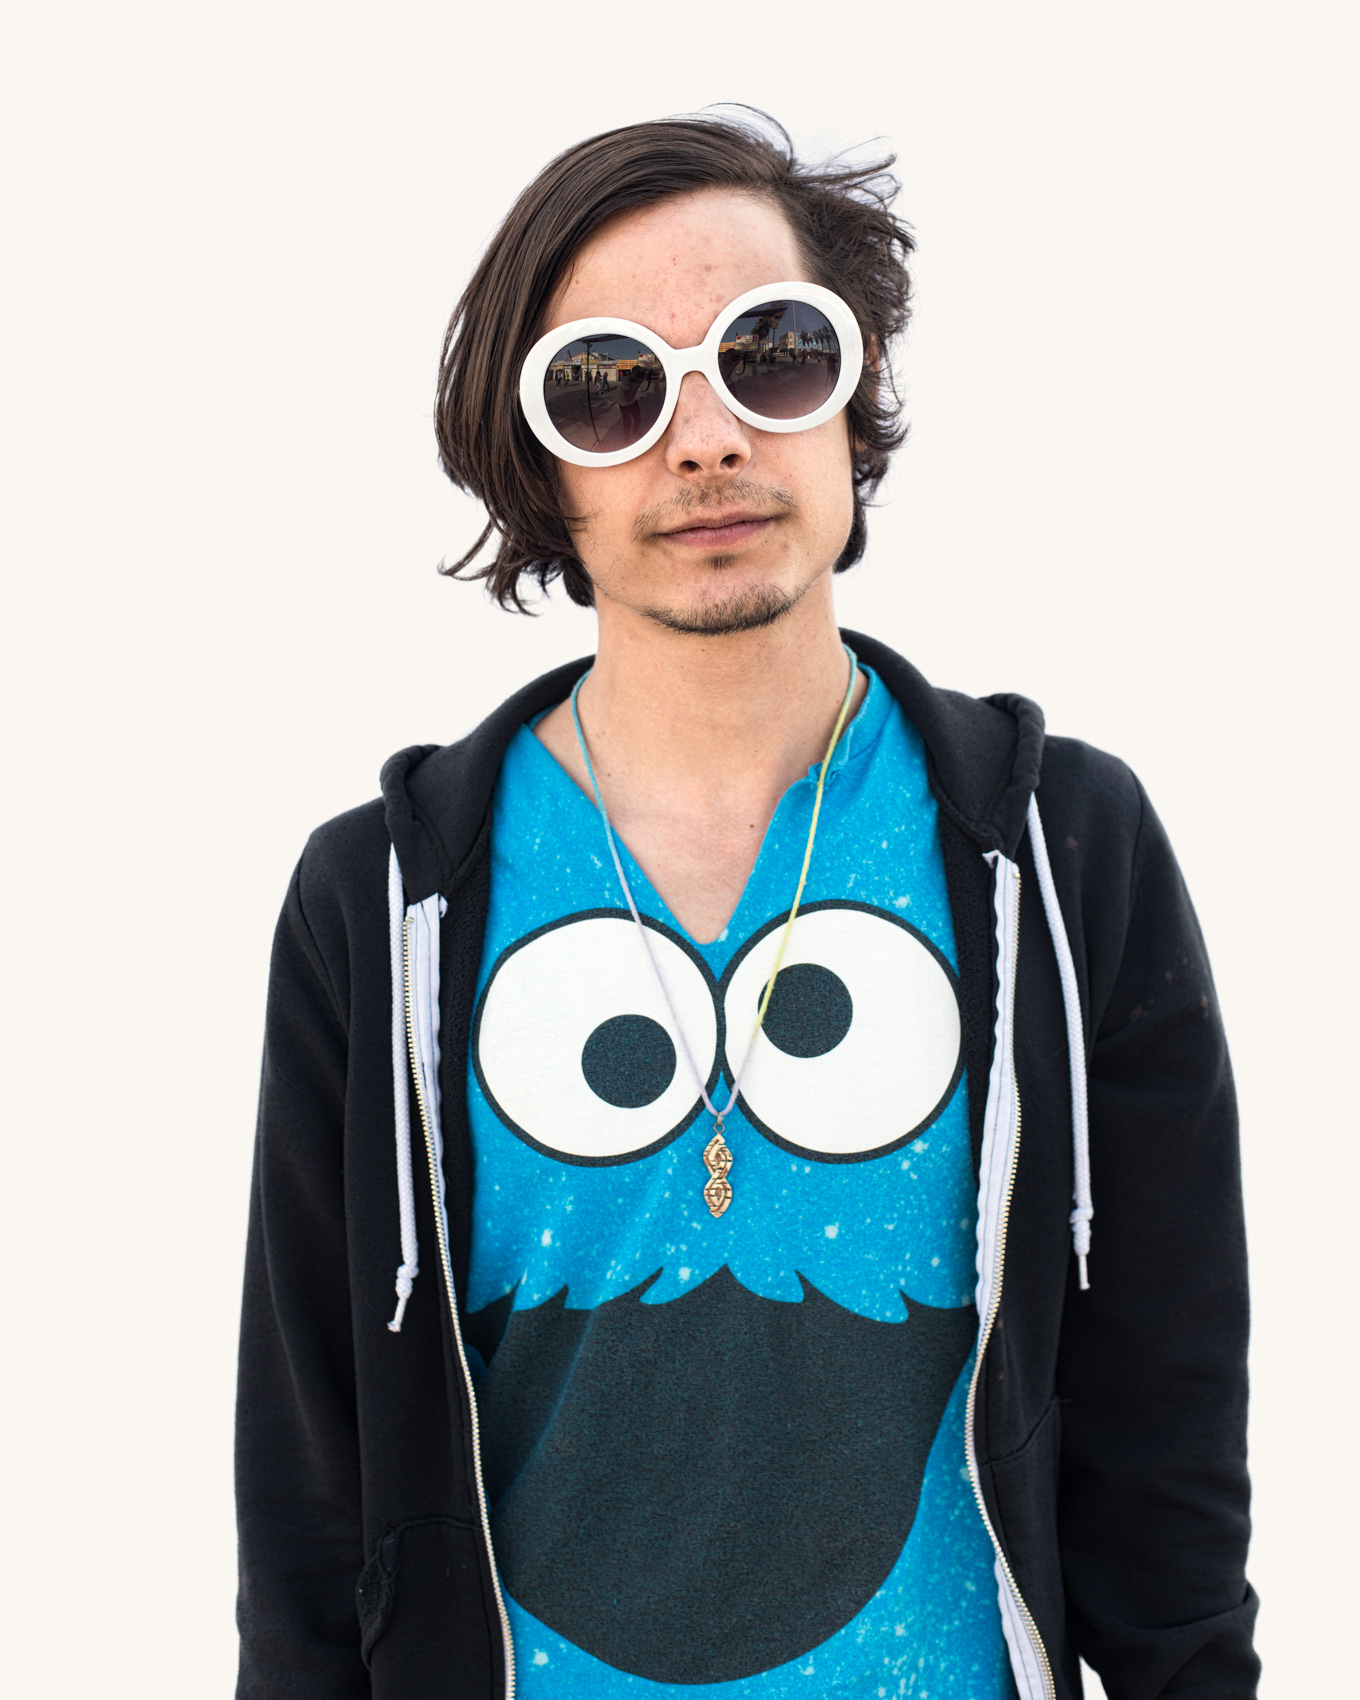 Man in Cookie Monster teeshirt Venice Beach street portrait series on white backdrop.